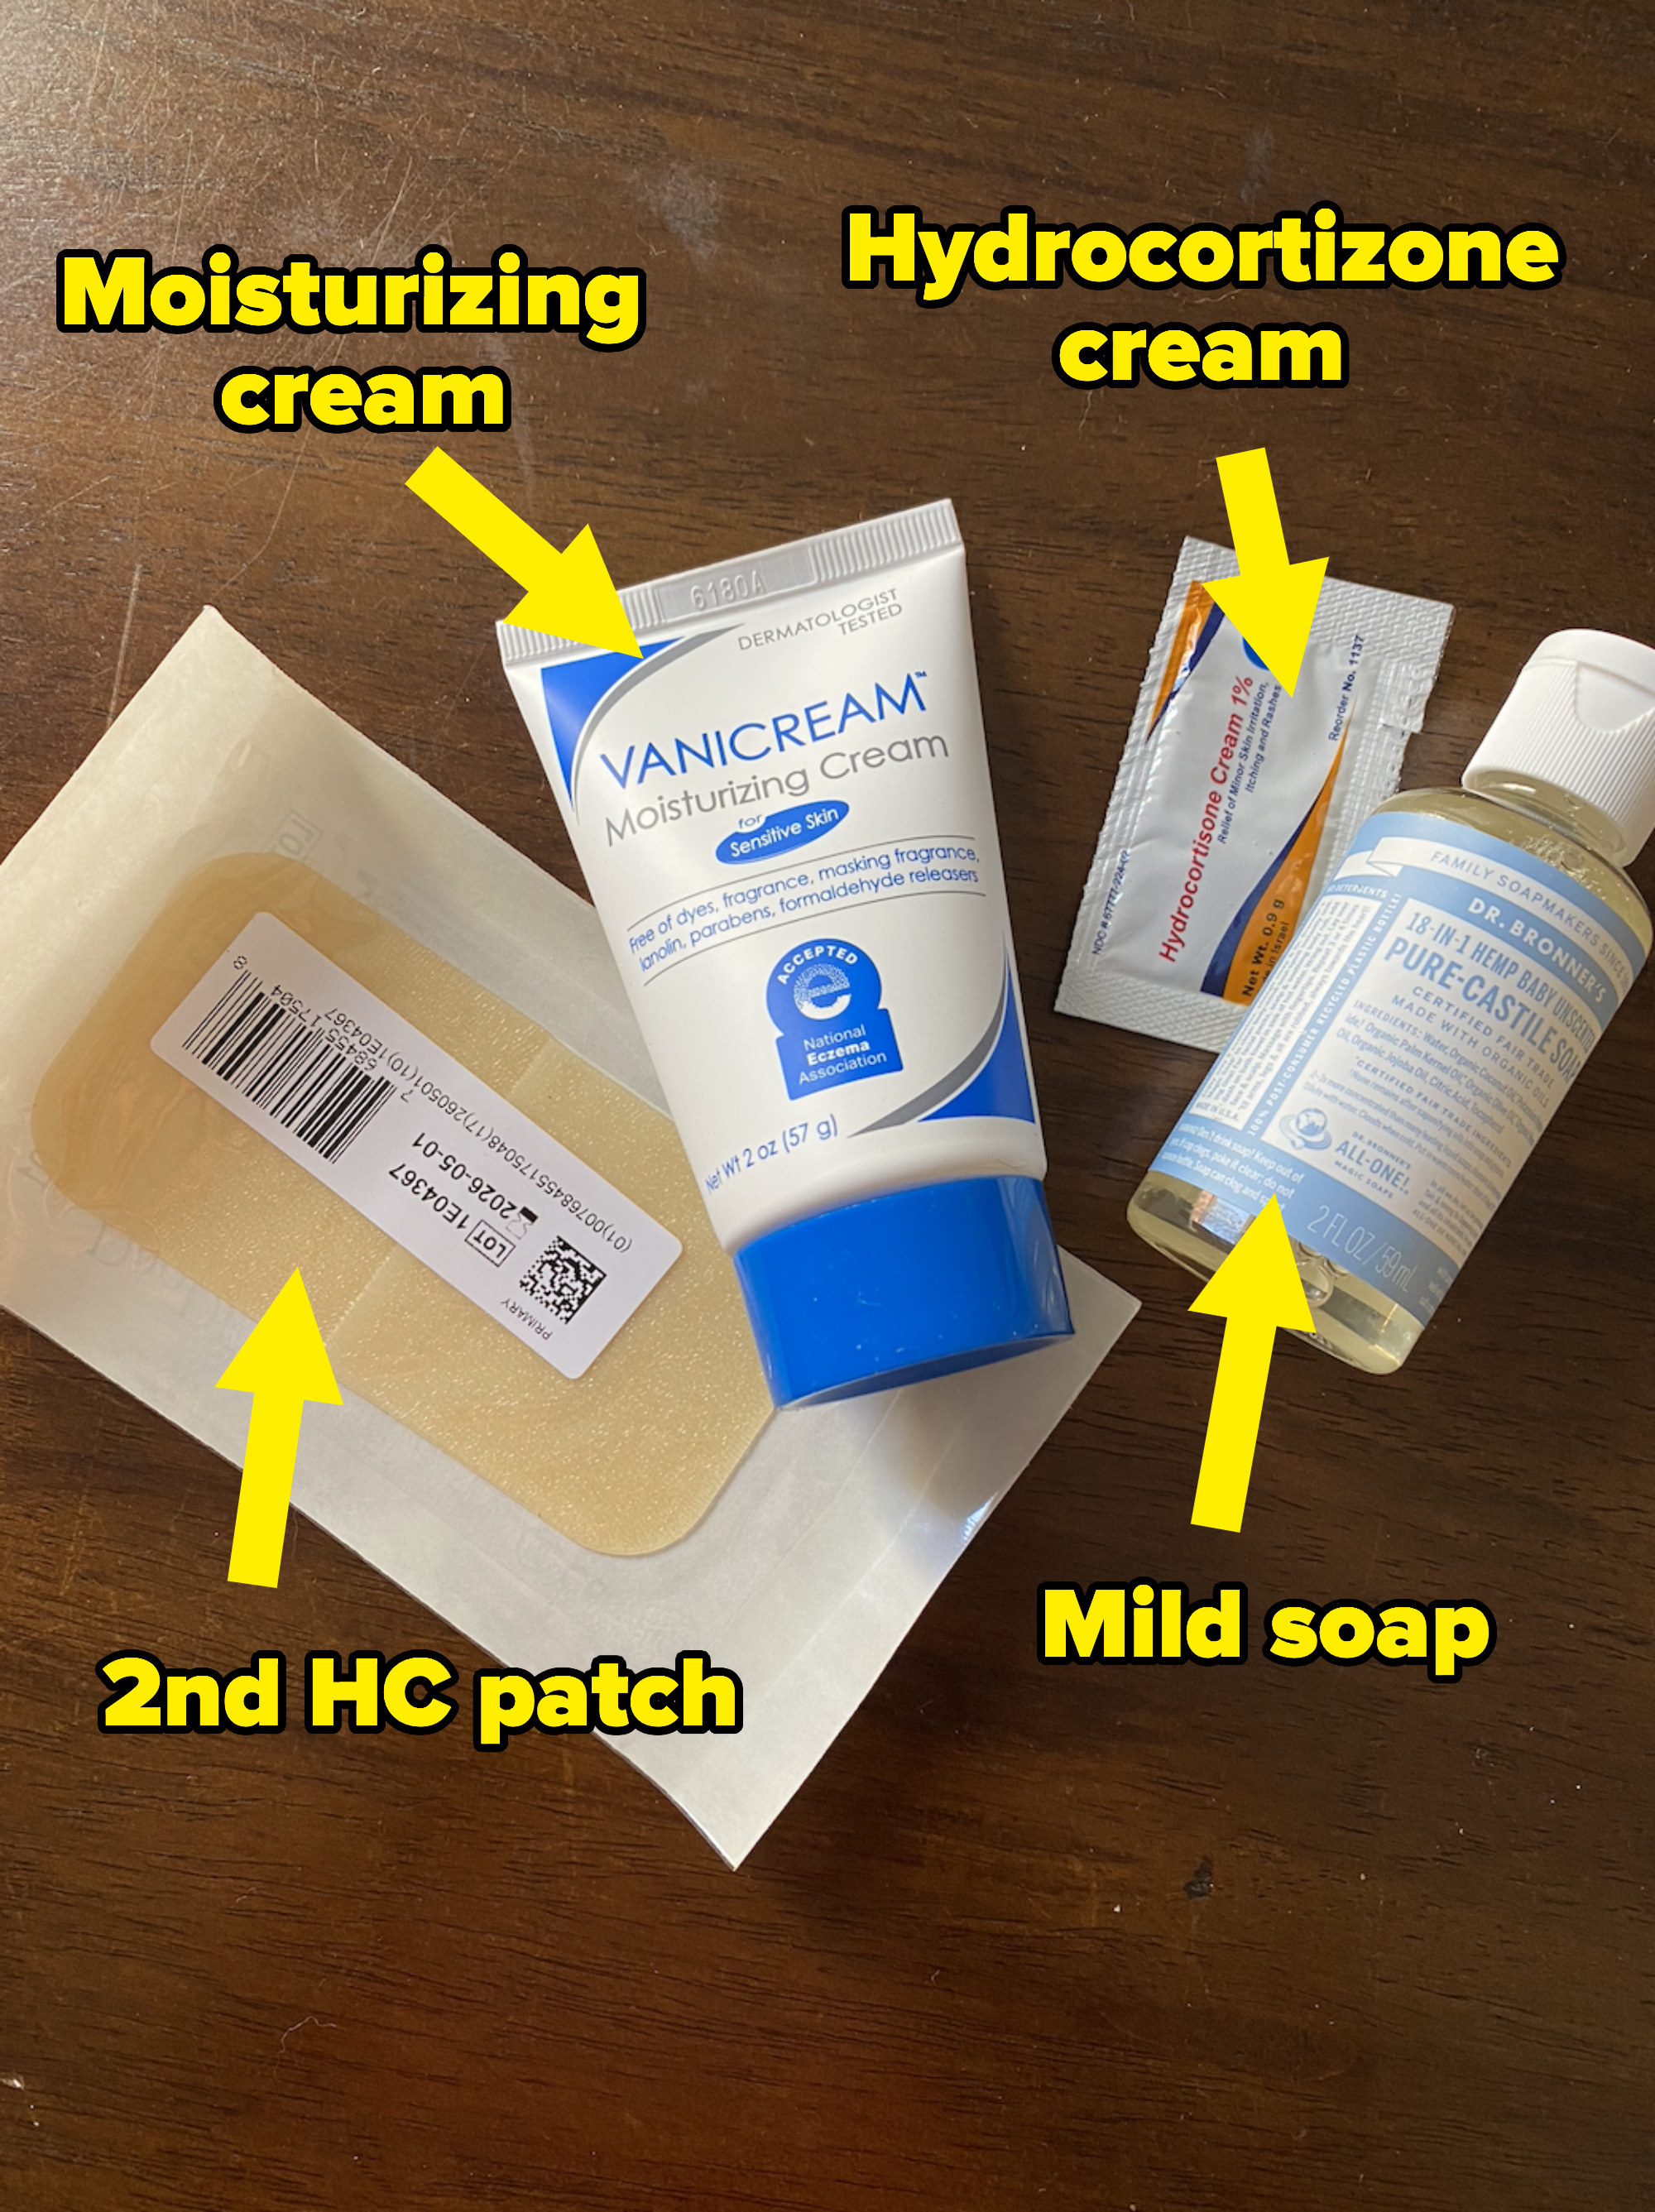 a second bandage patch, lotion, mild soap and hydrocortizone cream